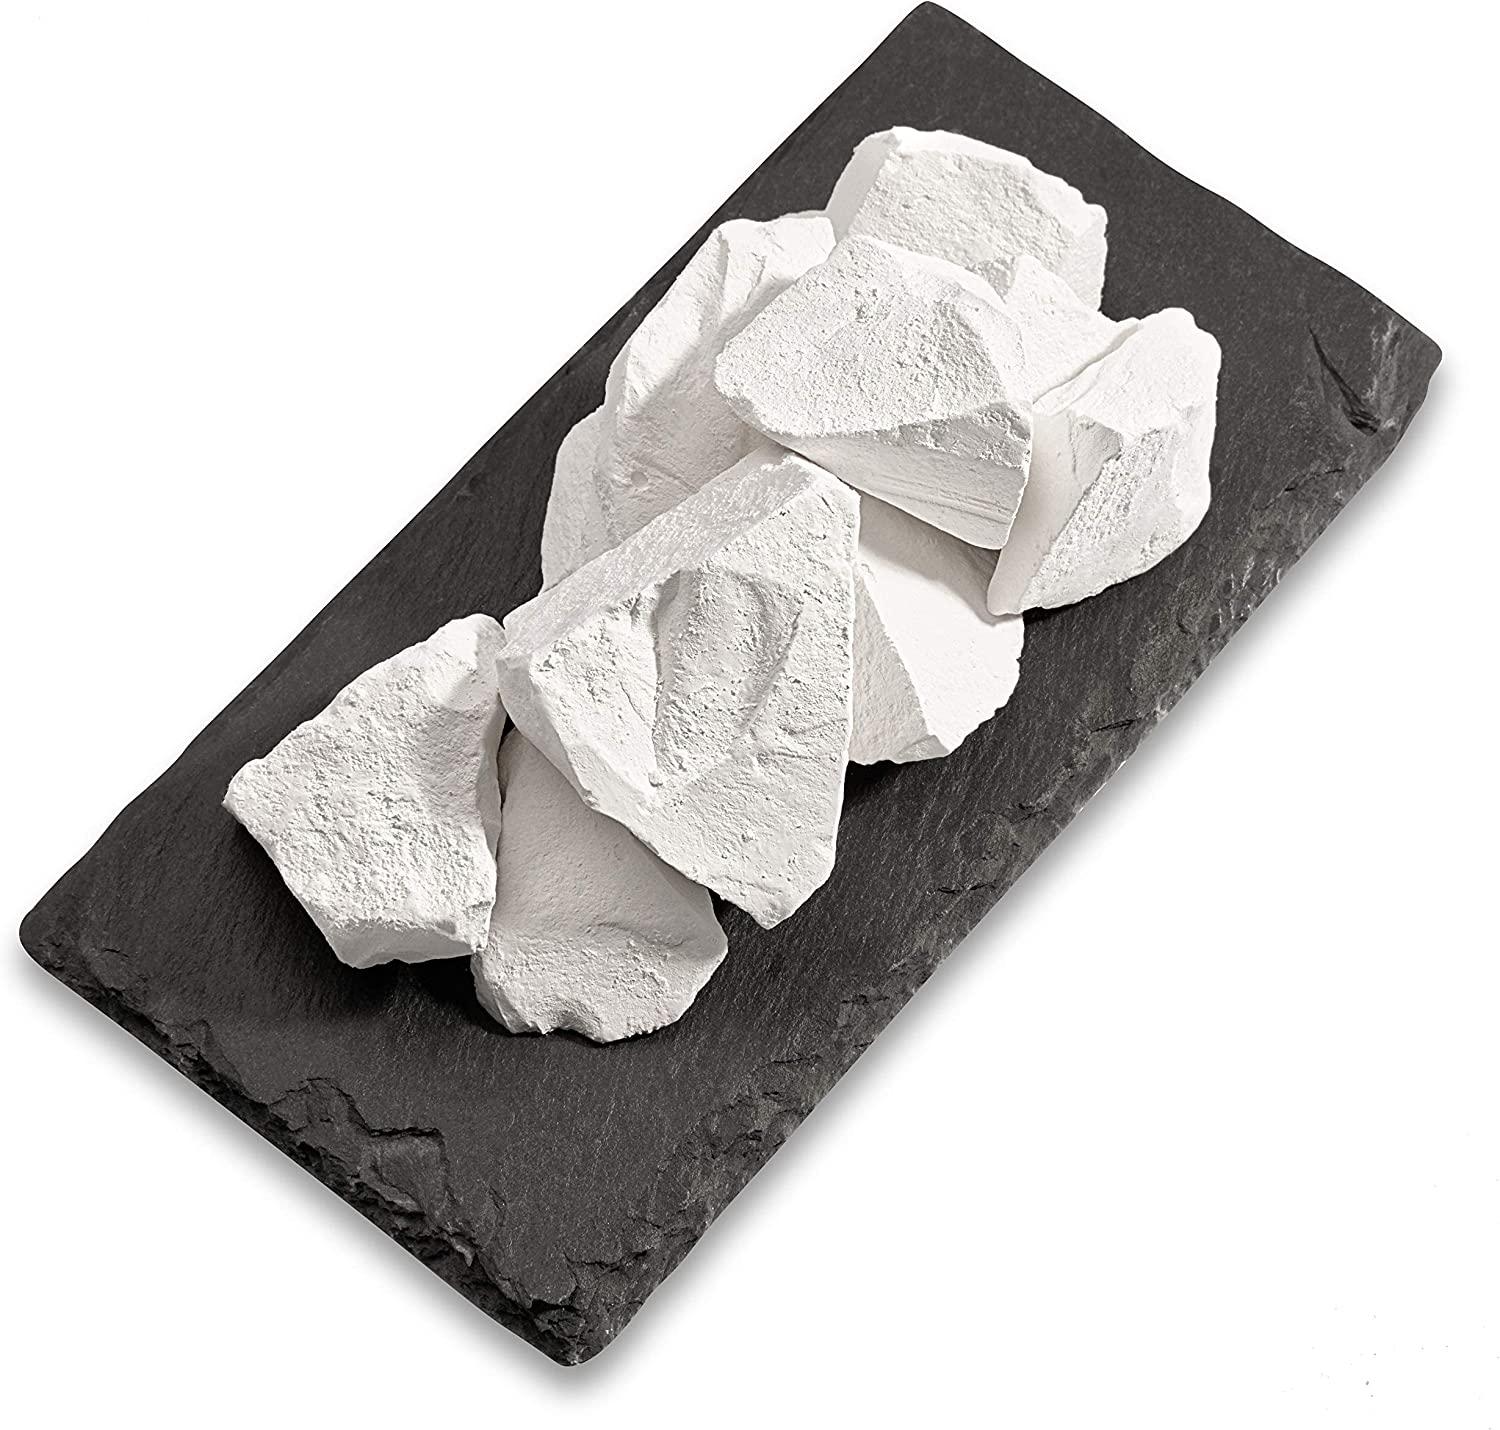 White Edible Clay Chunks Natural for Eating, Edible Qatar